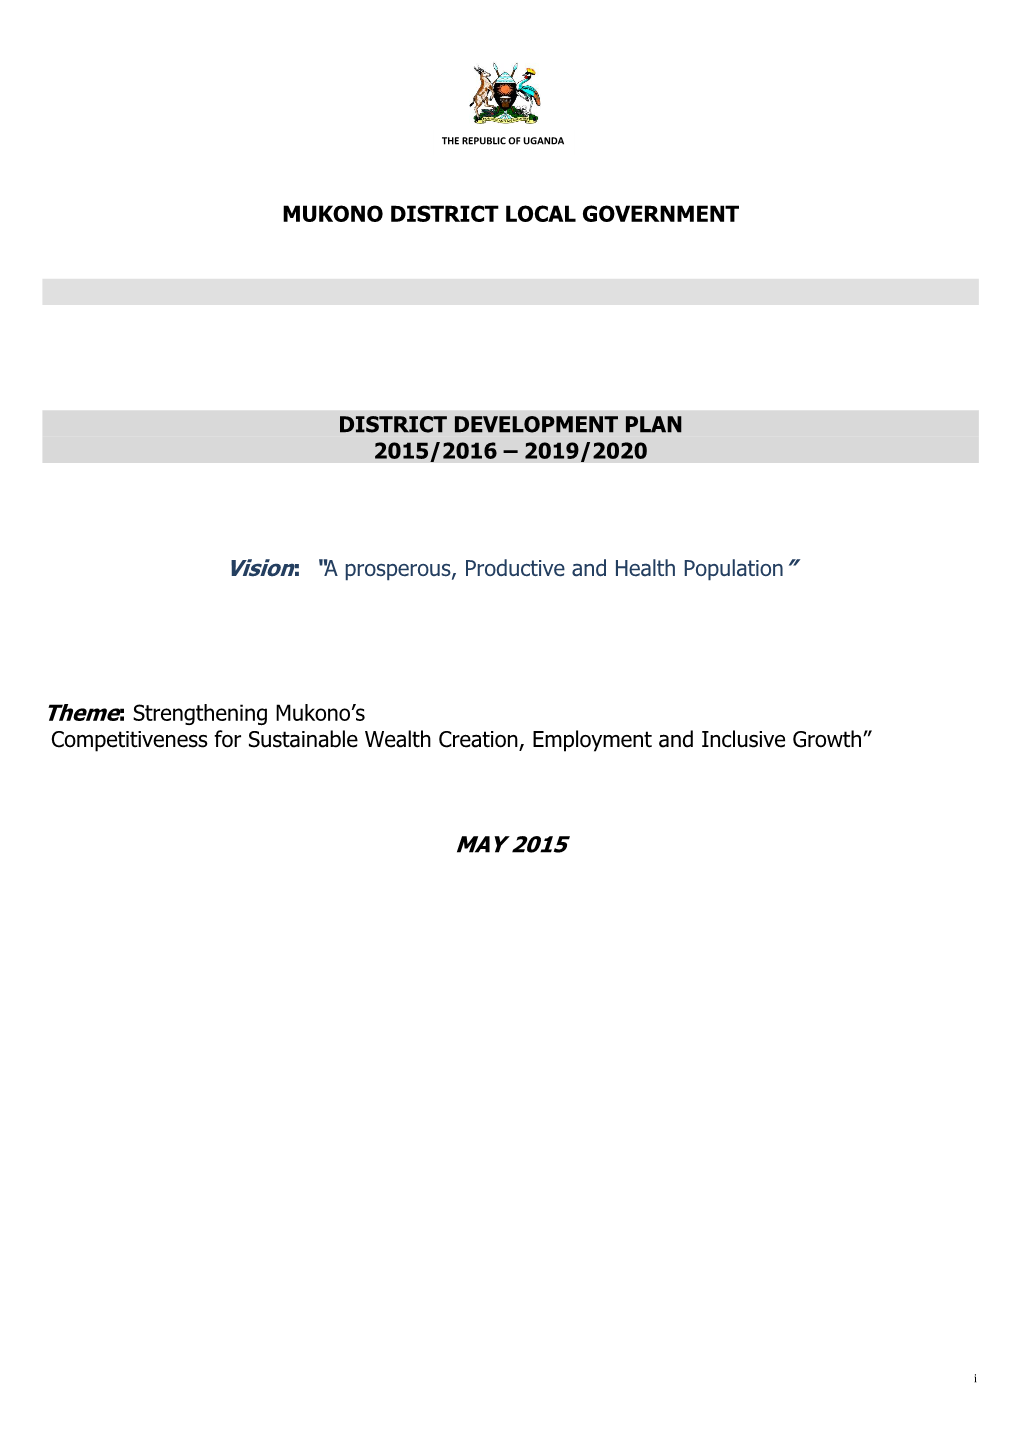 Mukono District Local Government District Development Plan 2015/2016